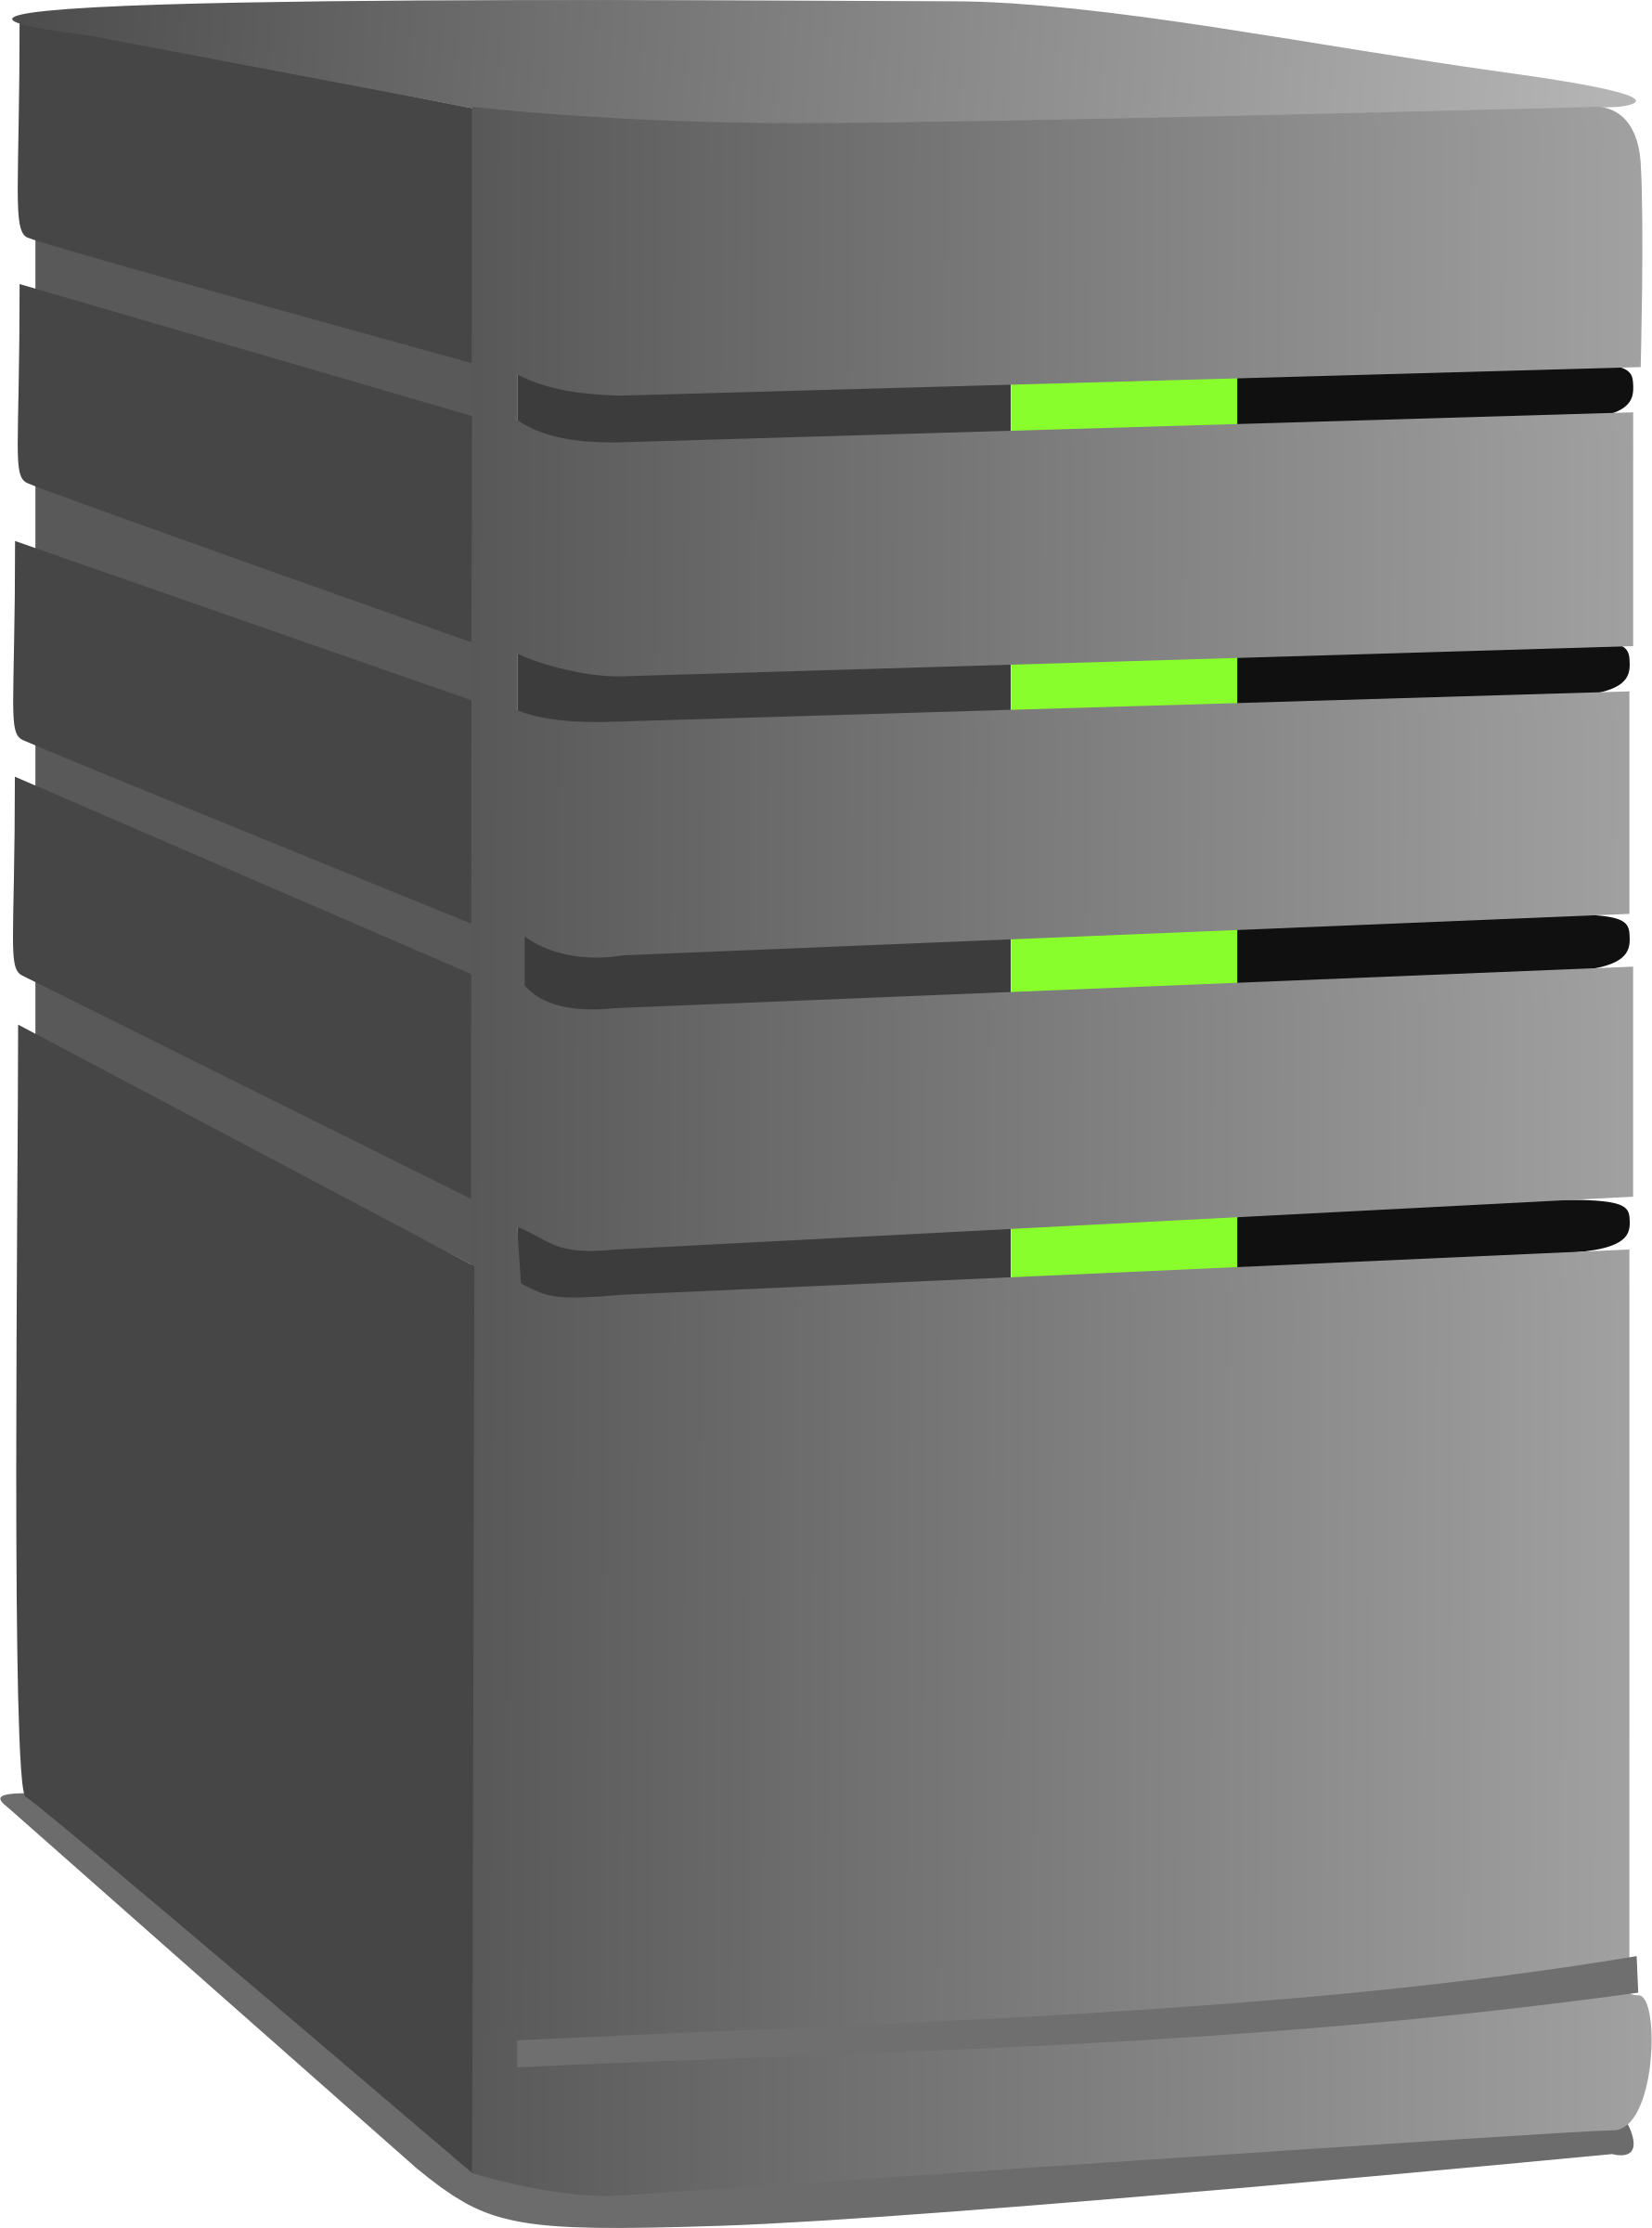 Server Png - Server, Transparent background PNG HD thumbnail